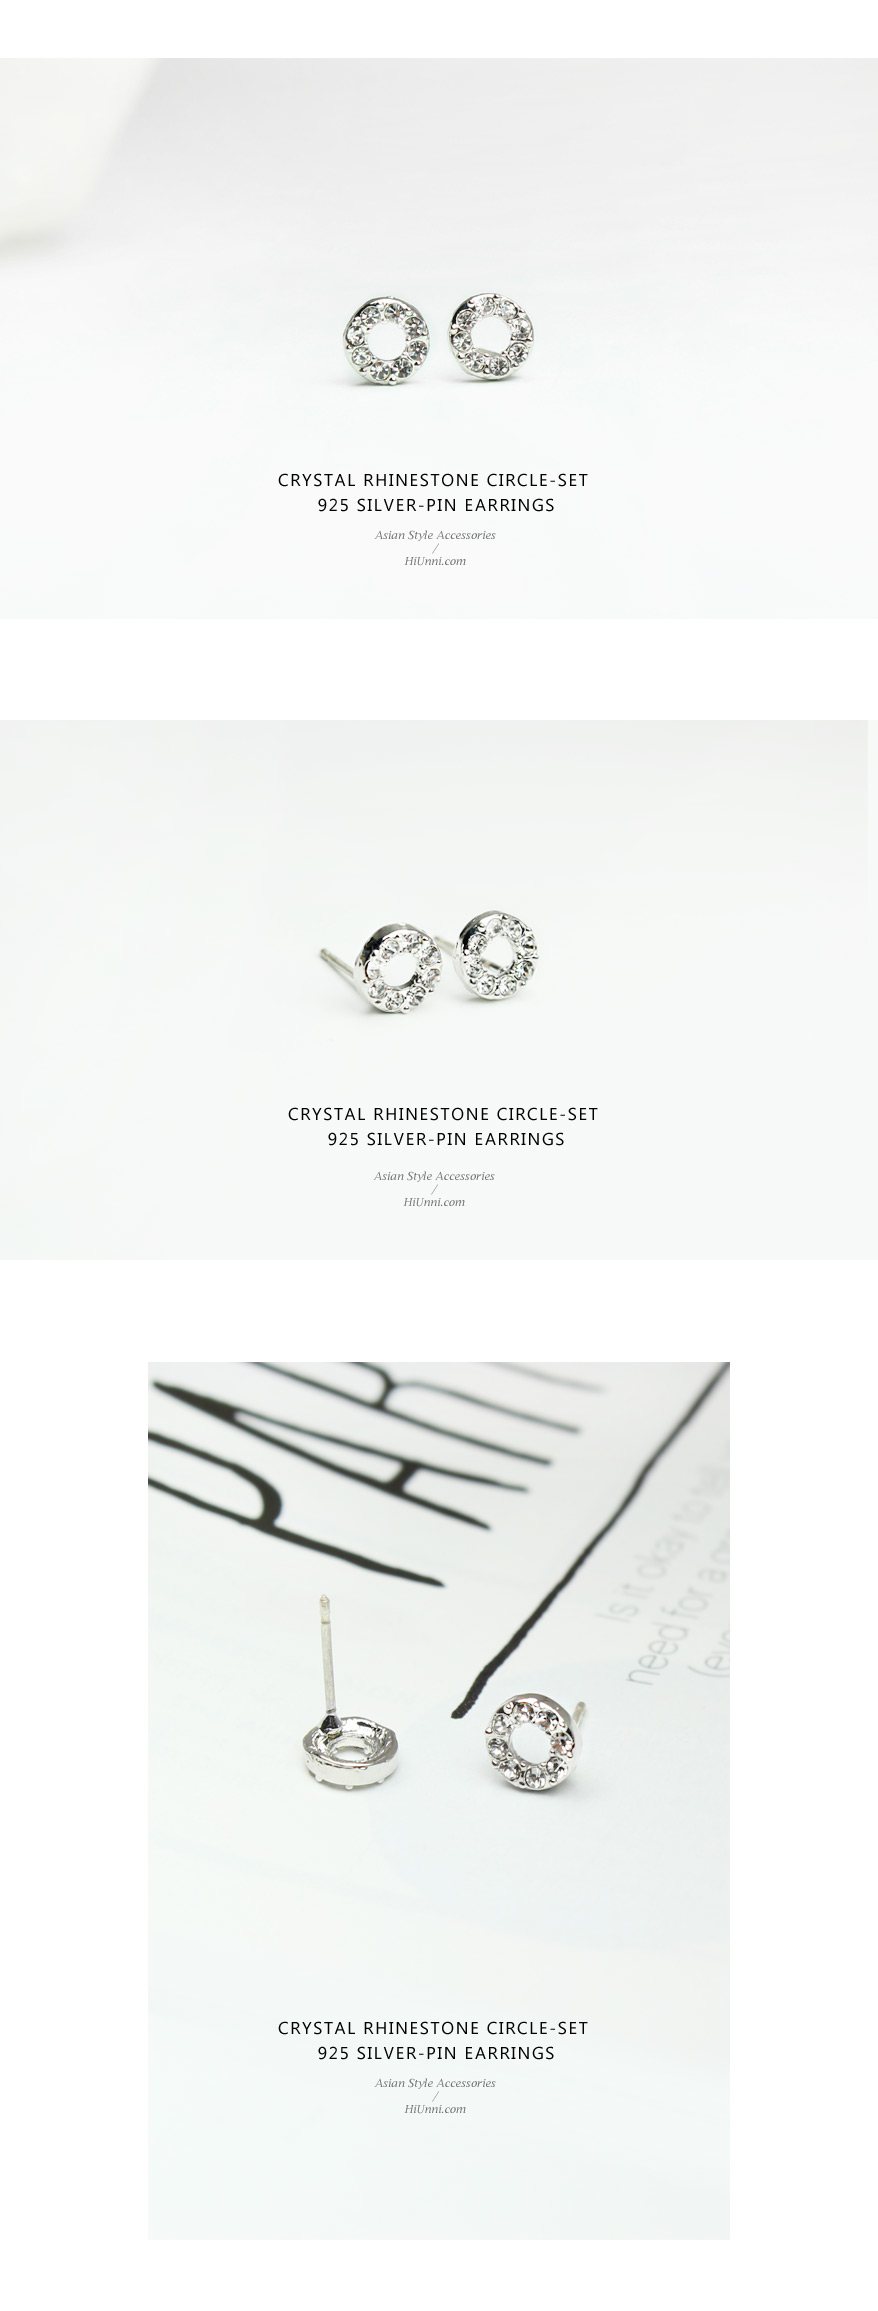 accessories_ear_stud_earrings_korean_asian-style_Crystal_Rhinestone_925-silver_Rhodium-Plated_Nickel-Free_Circle-set_1